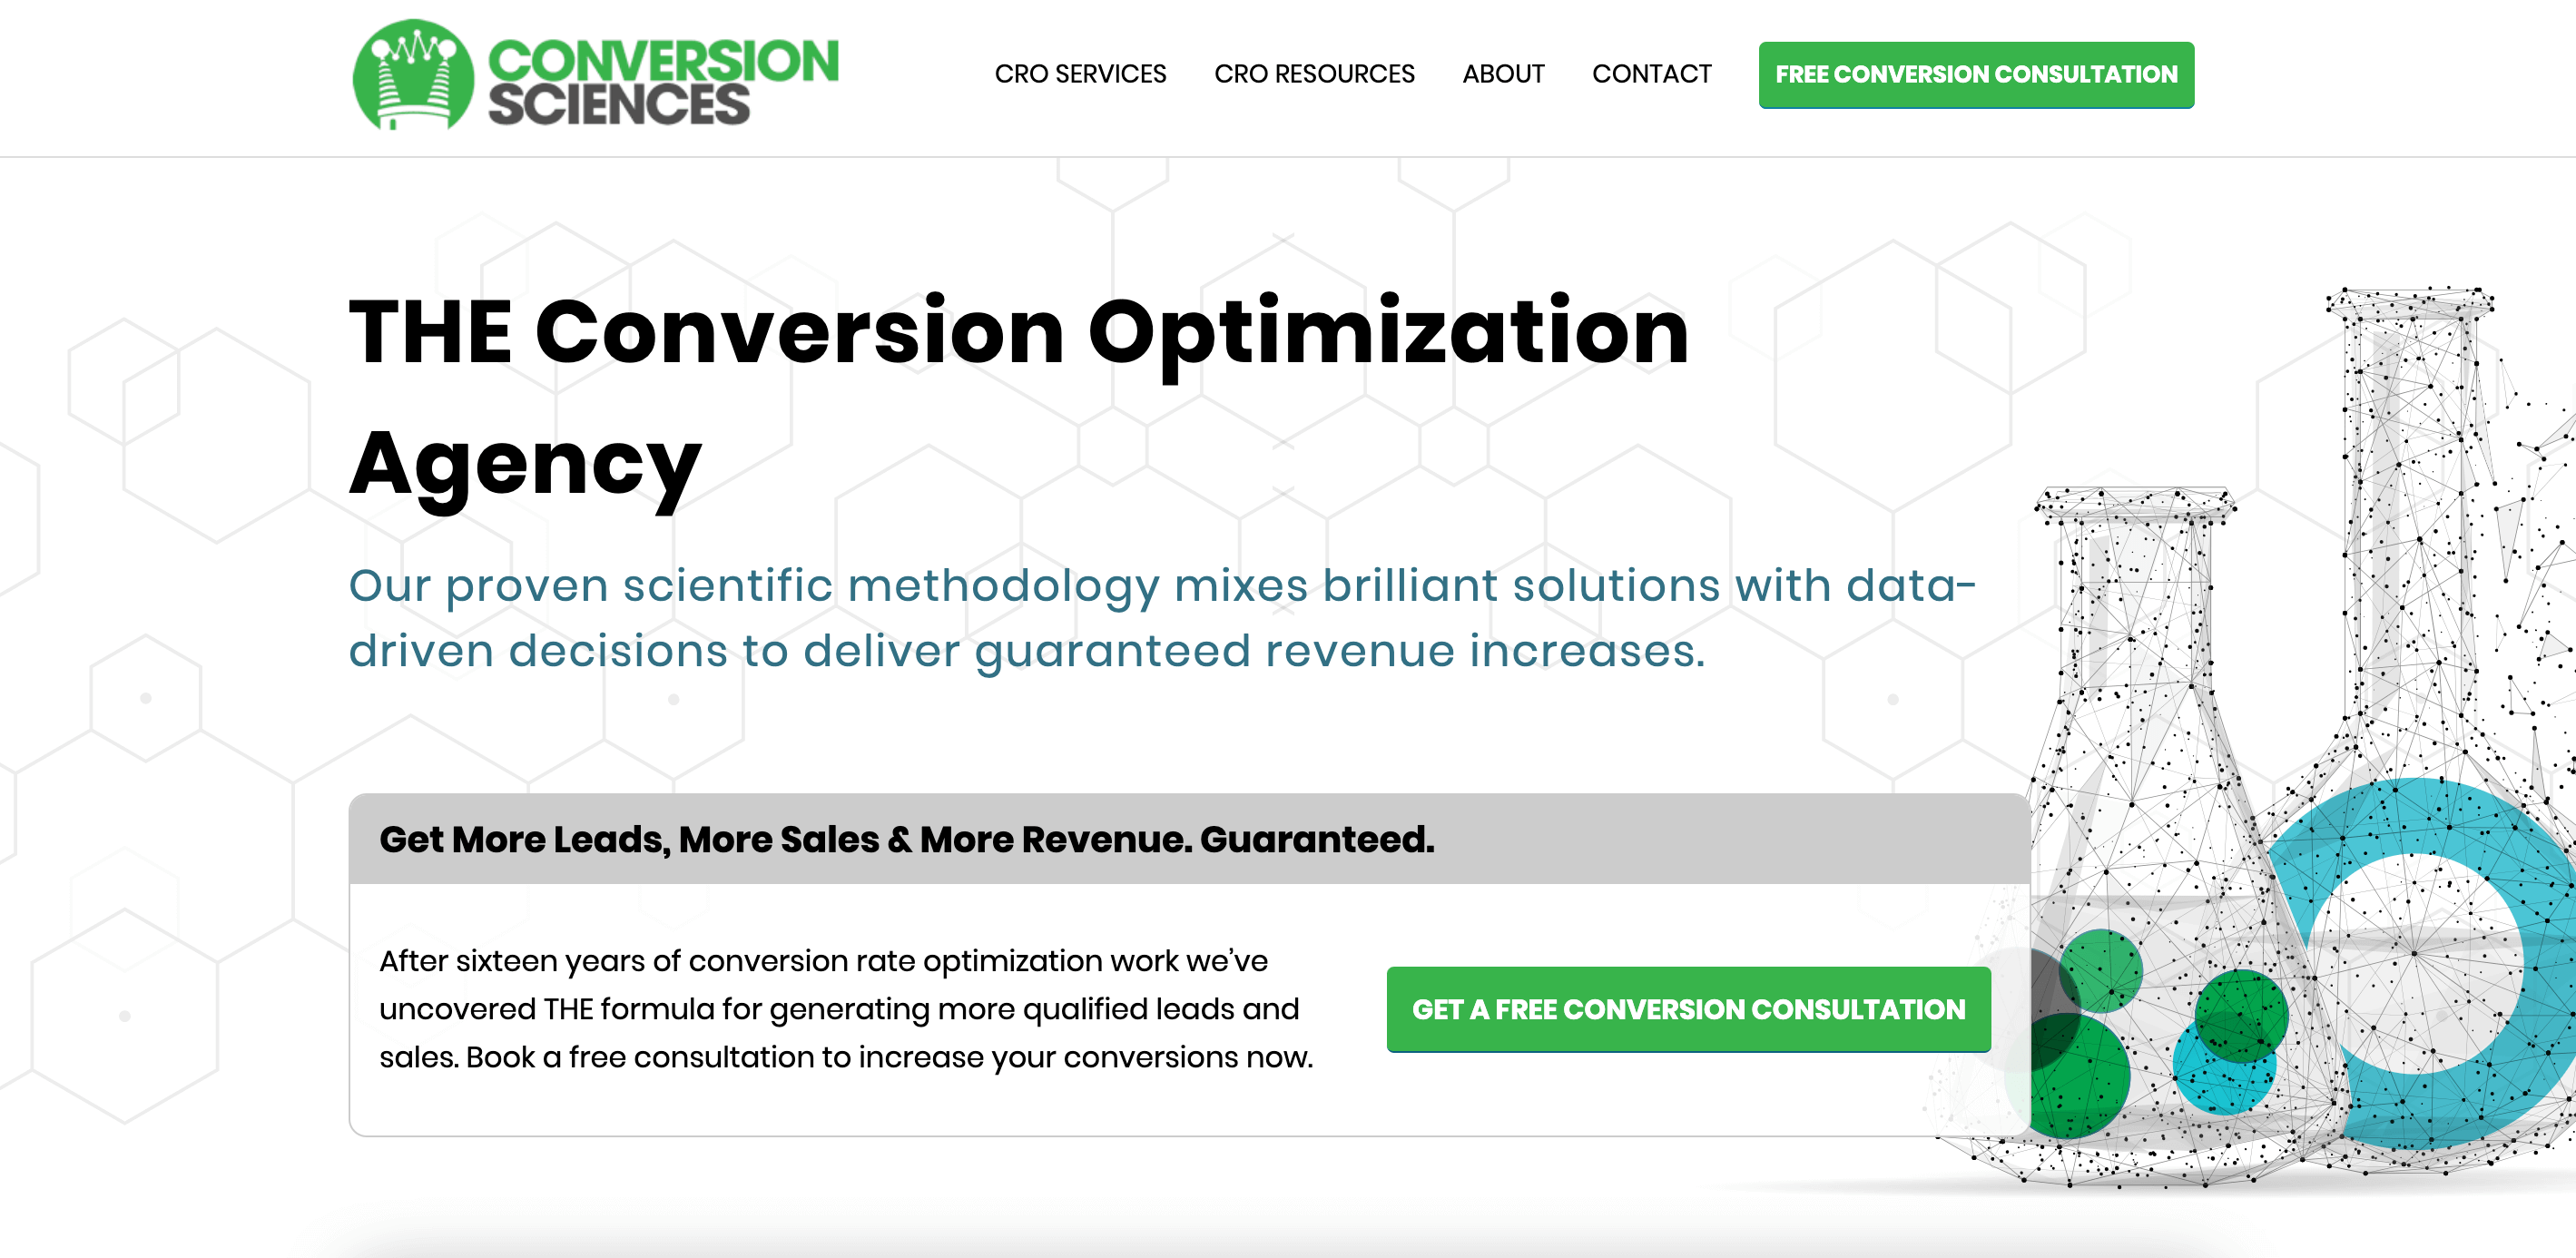 Top Conversion Rate Optimization Companies